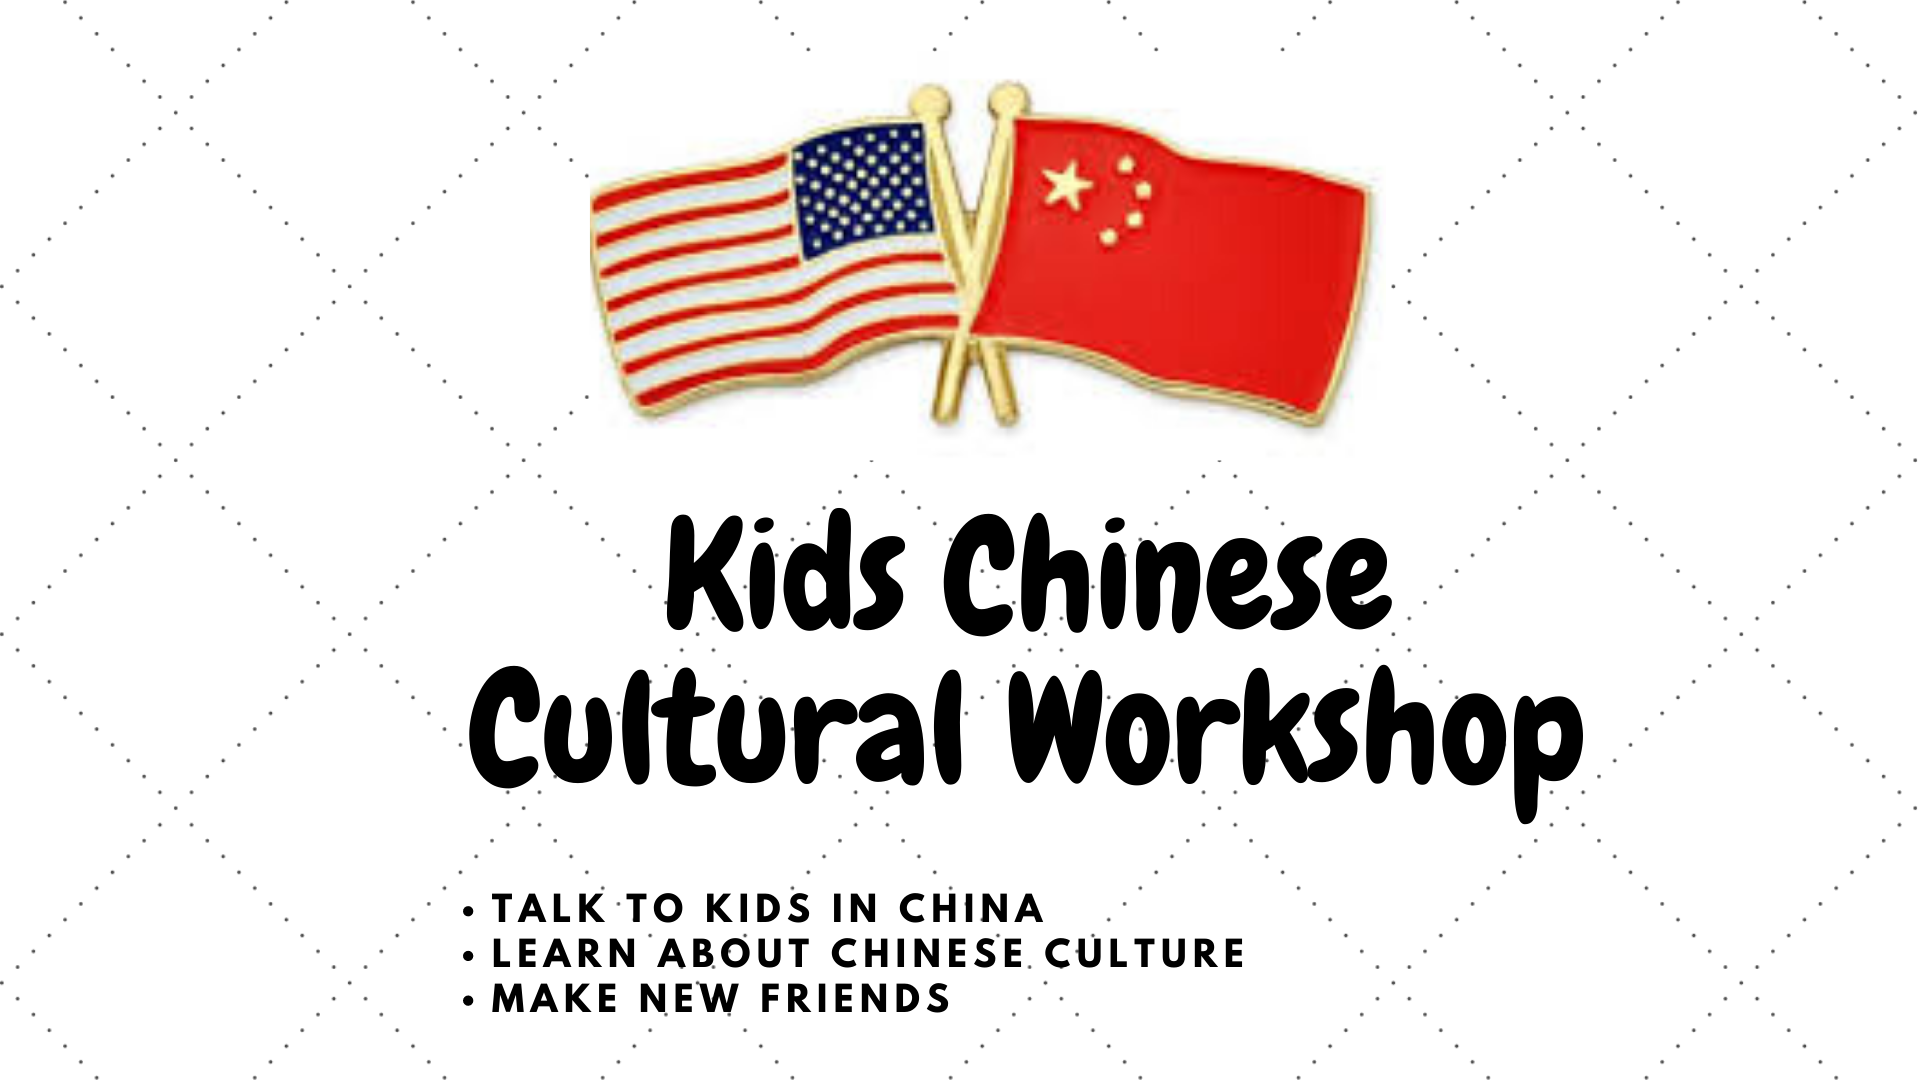 USChinaKidsClub Cultural Workshop